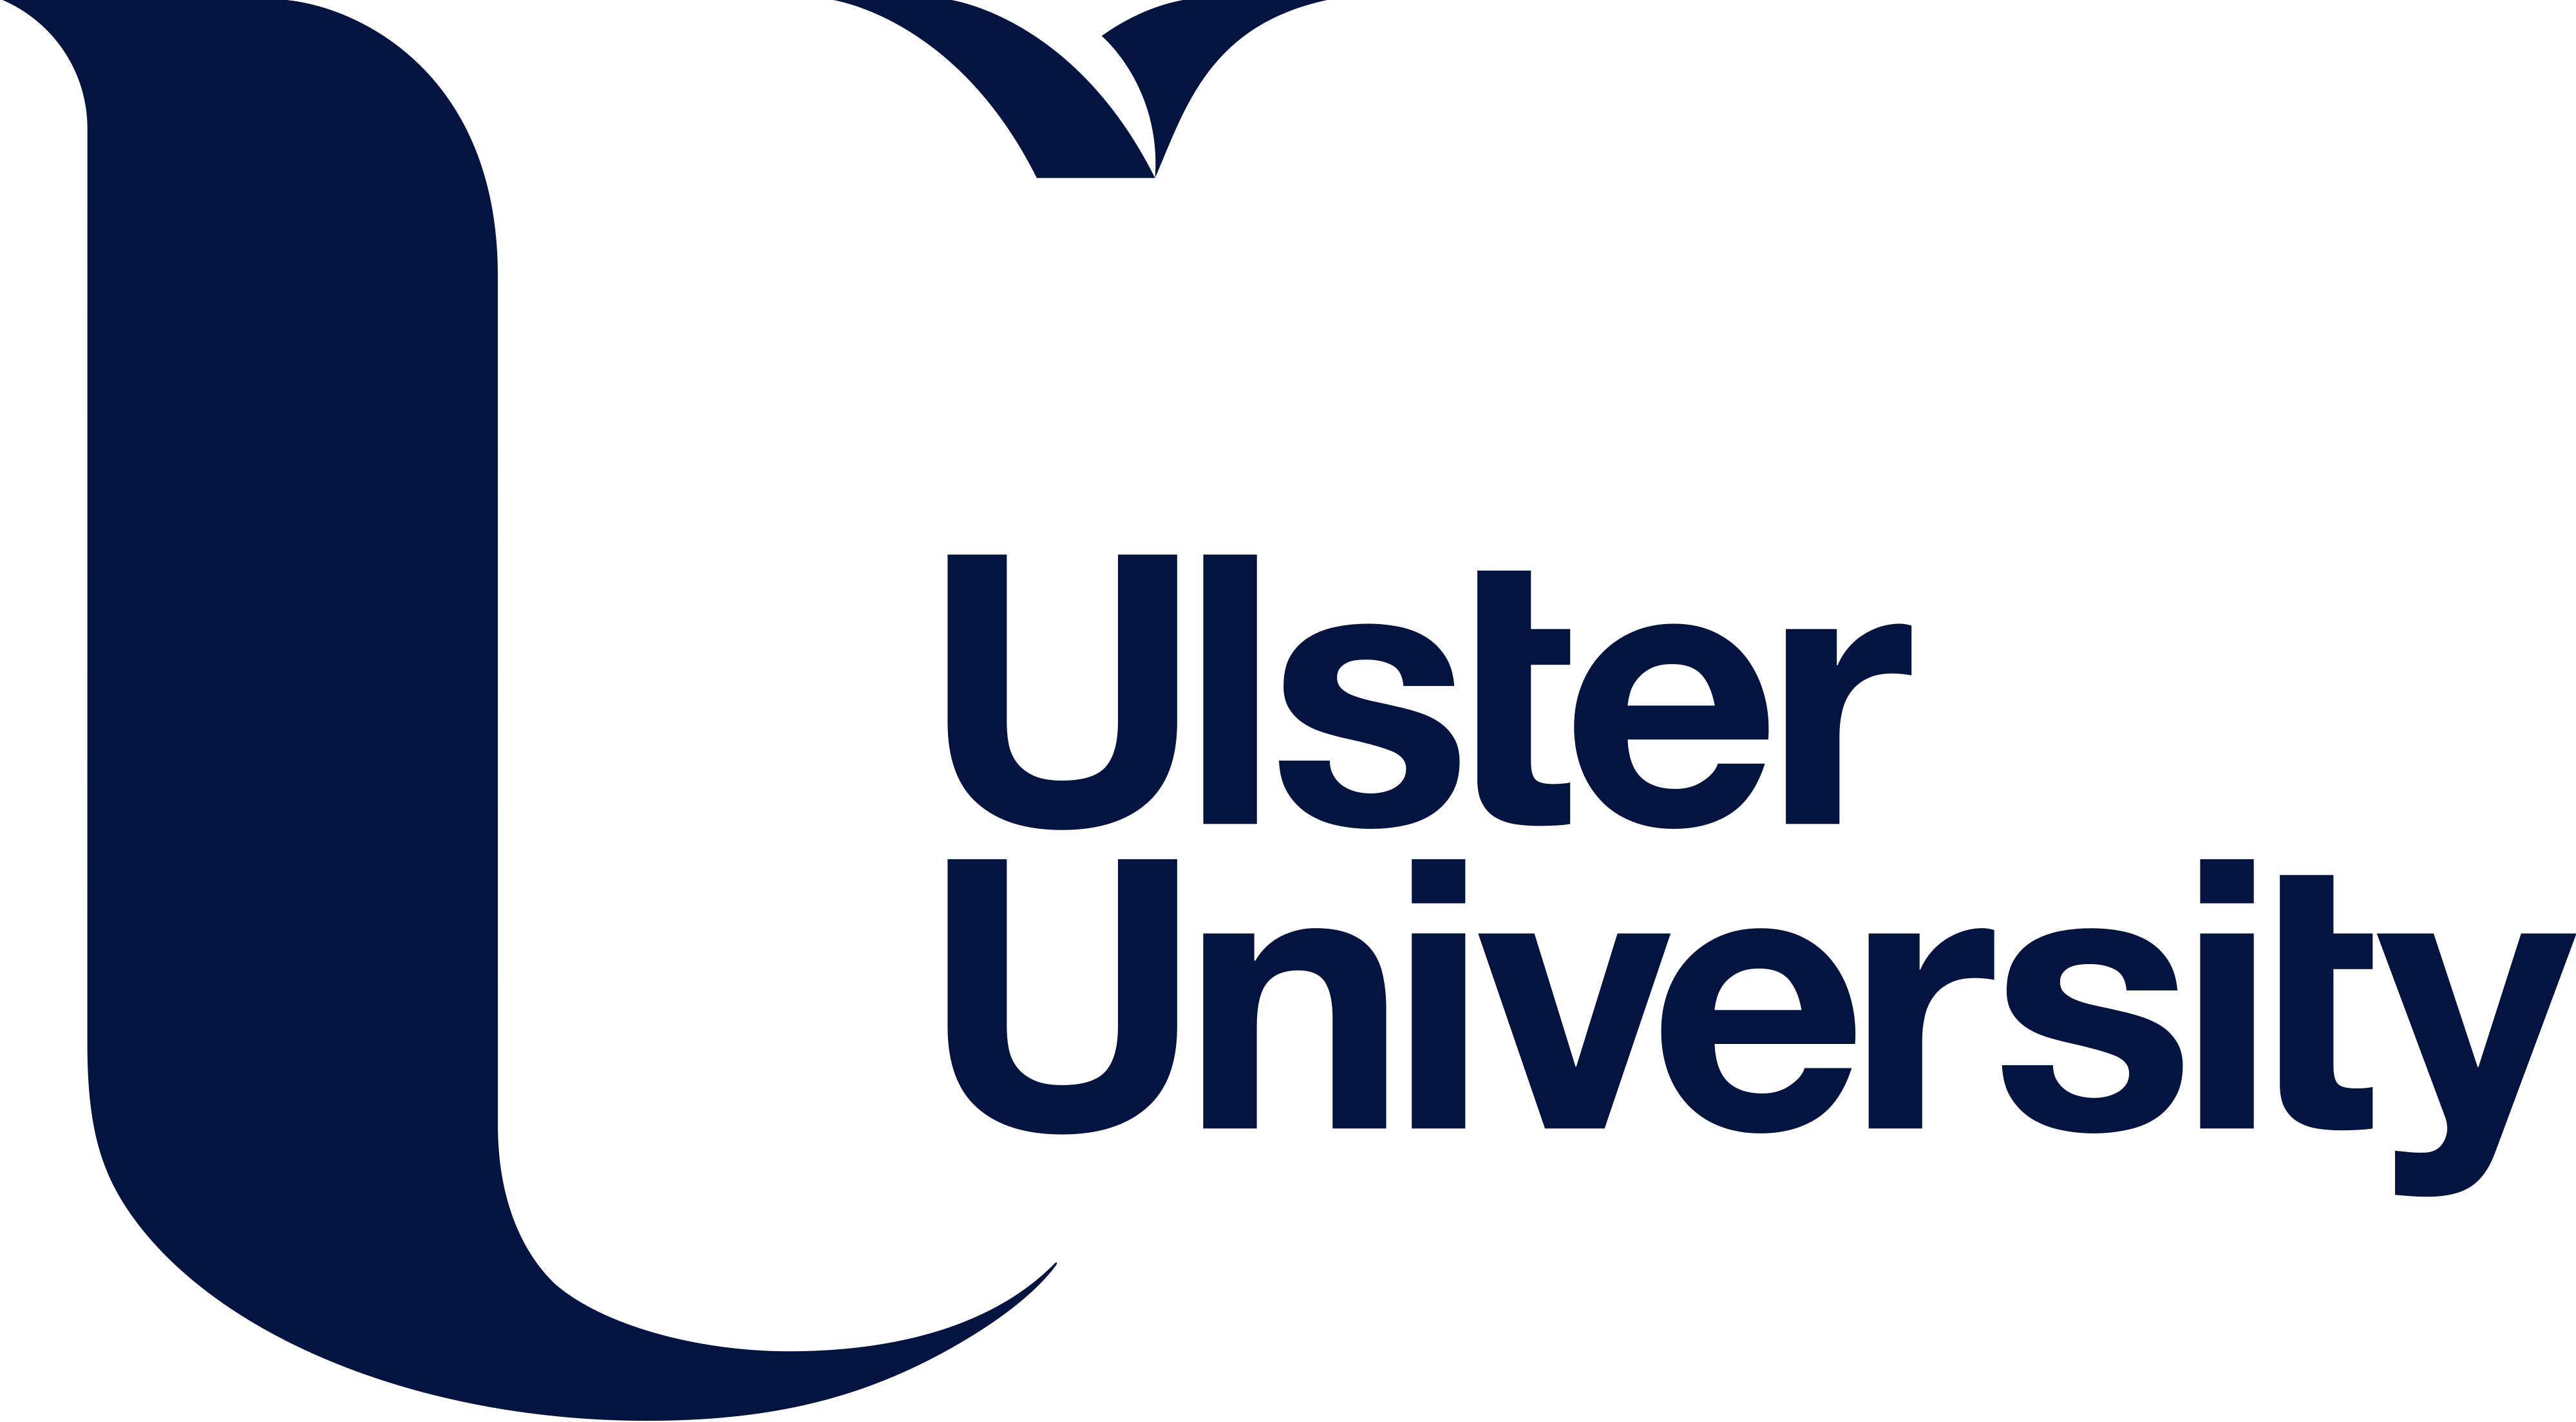 ulster university creative writing phd